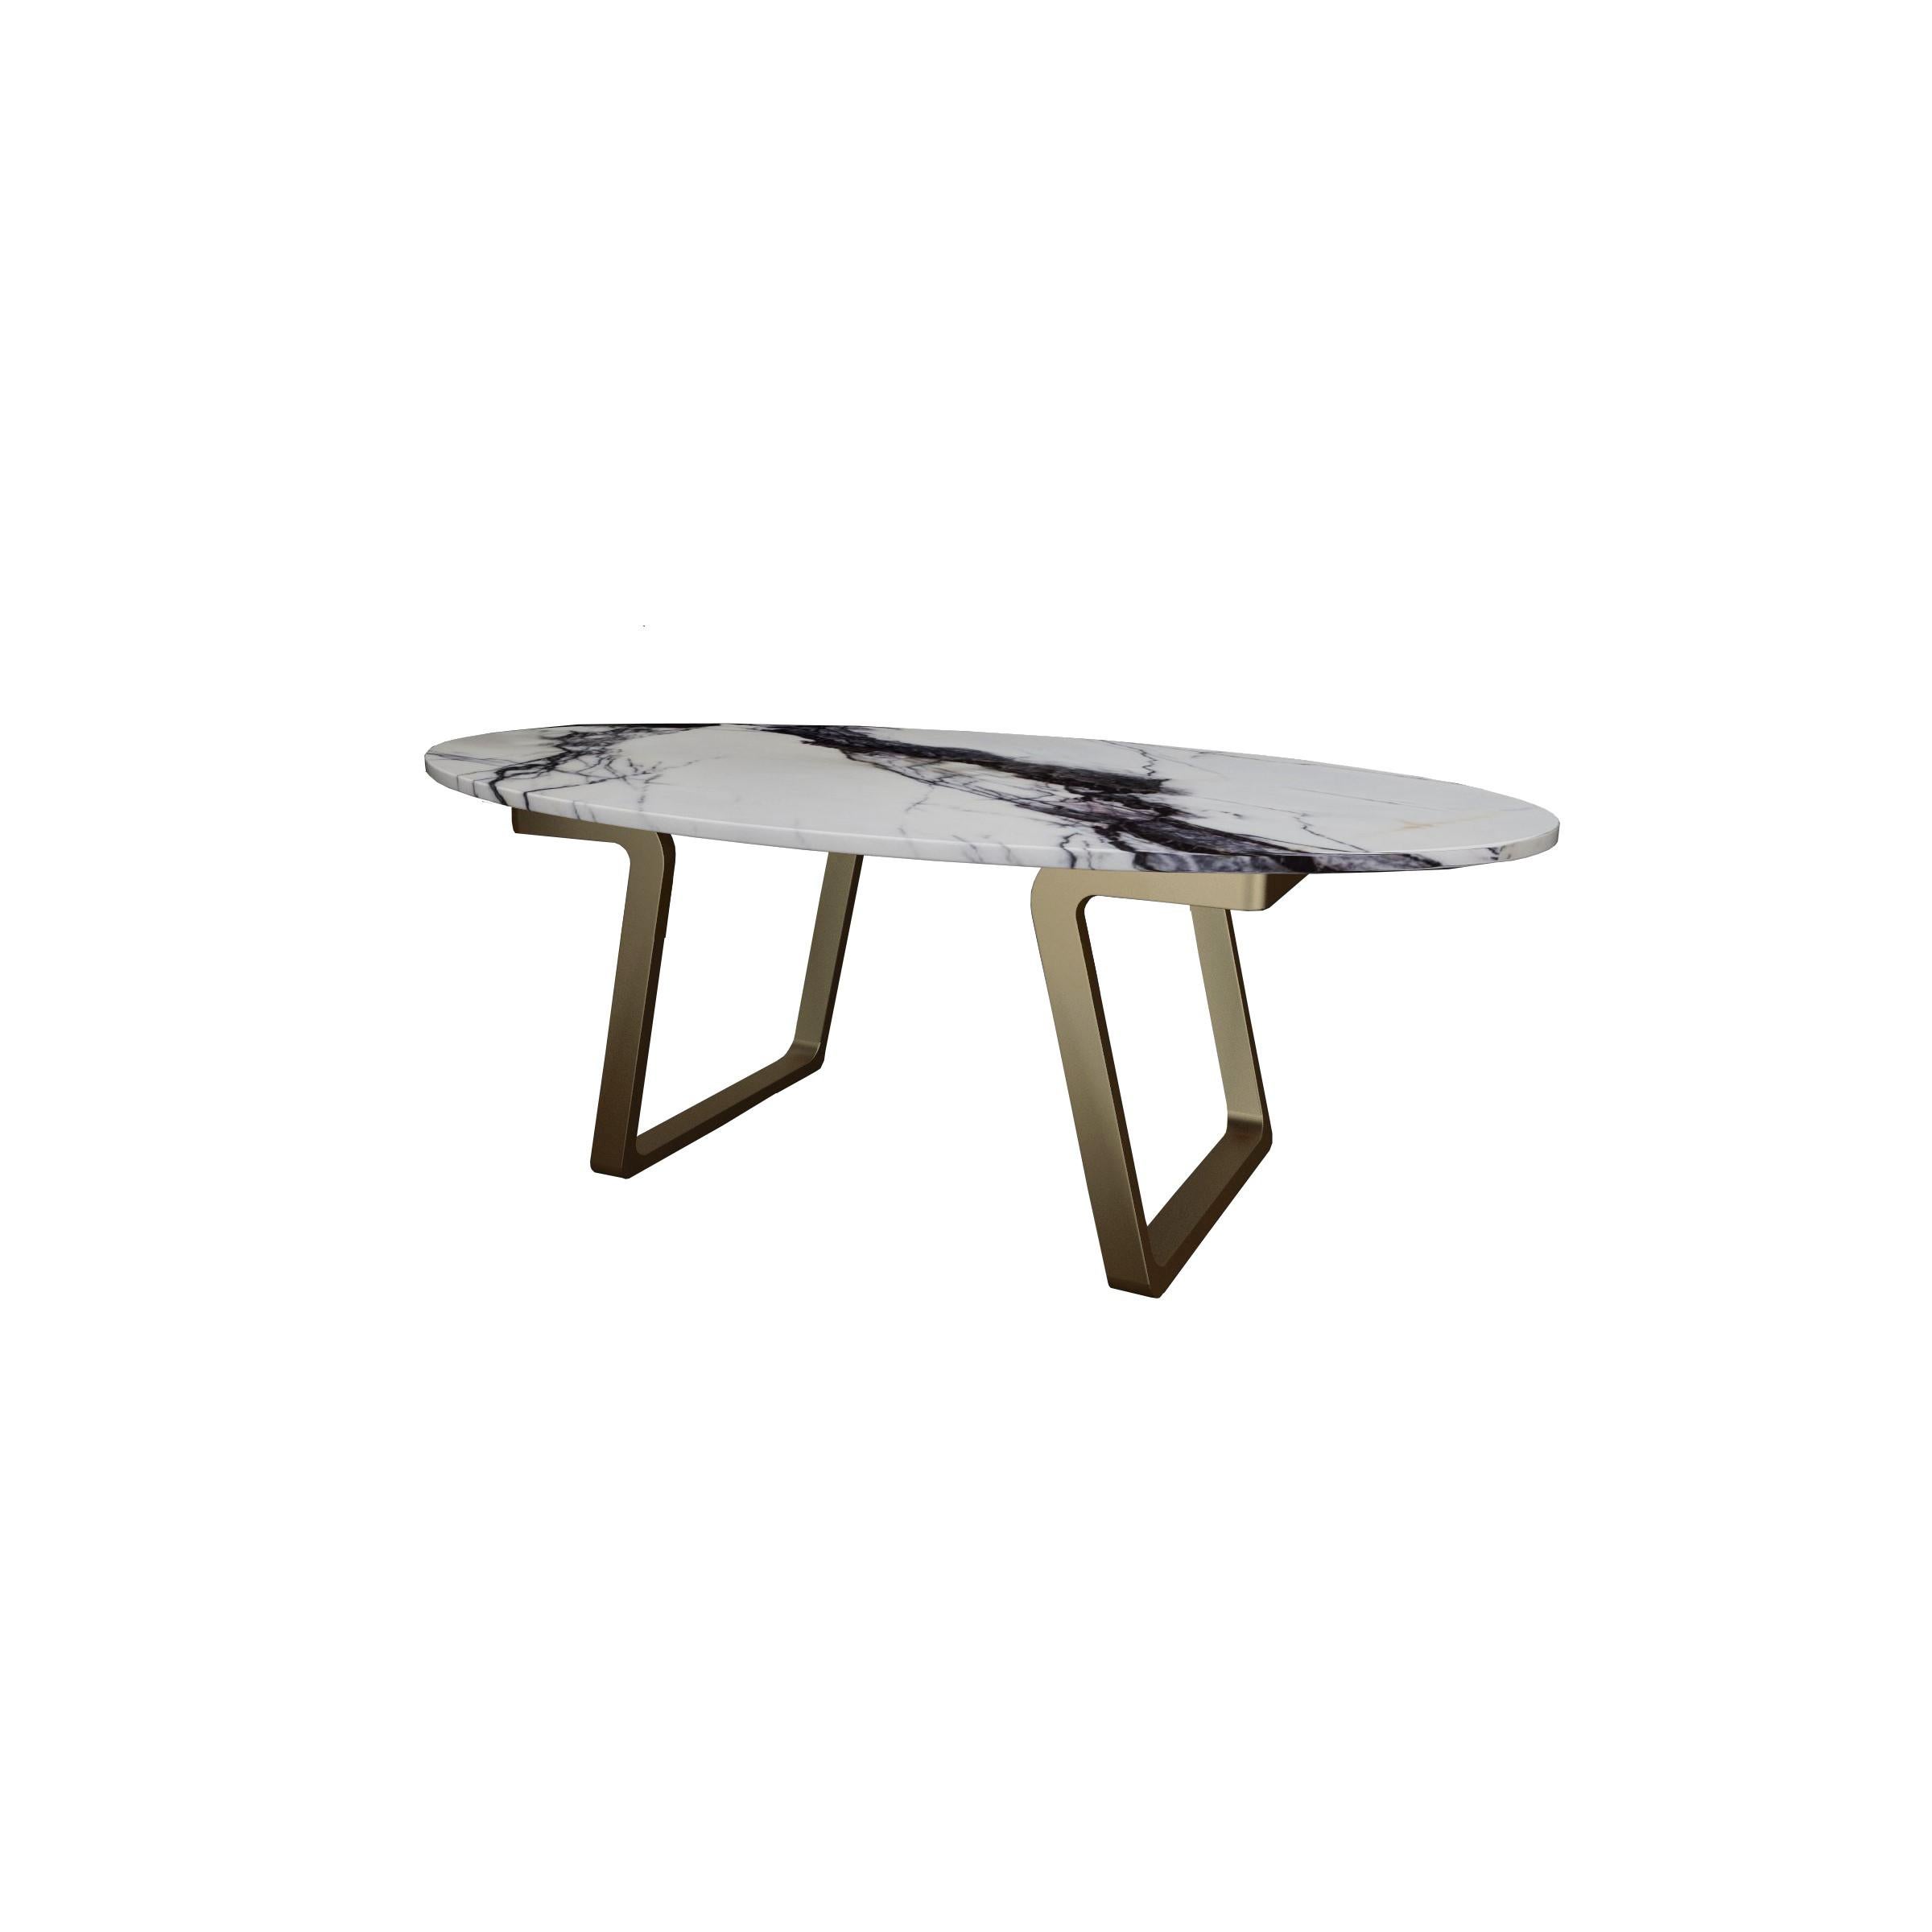 Scandinavian Modern NORDST JERRY Coffee Table, Italian Grey Rain Marble, Danish Modern Design, New For Sale